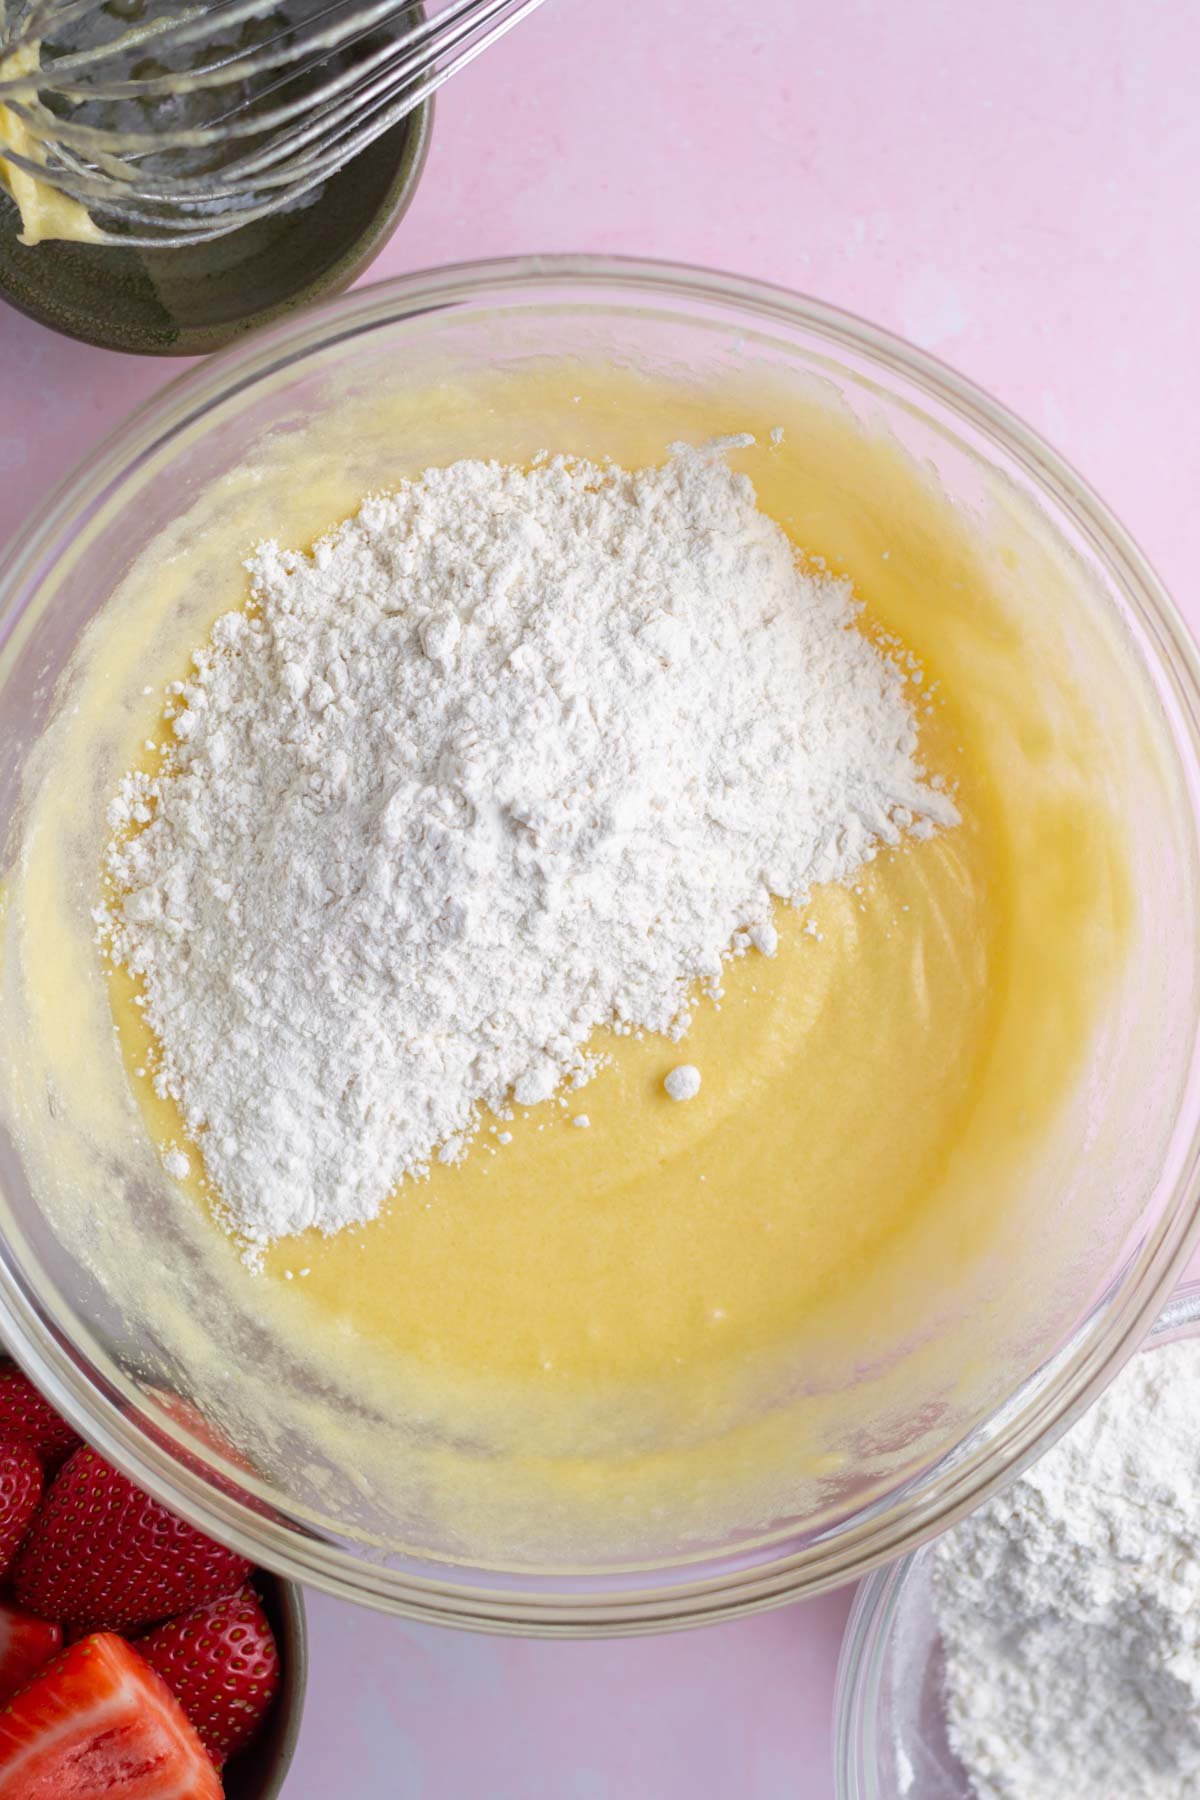 Flour being added to vanilla cake batter